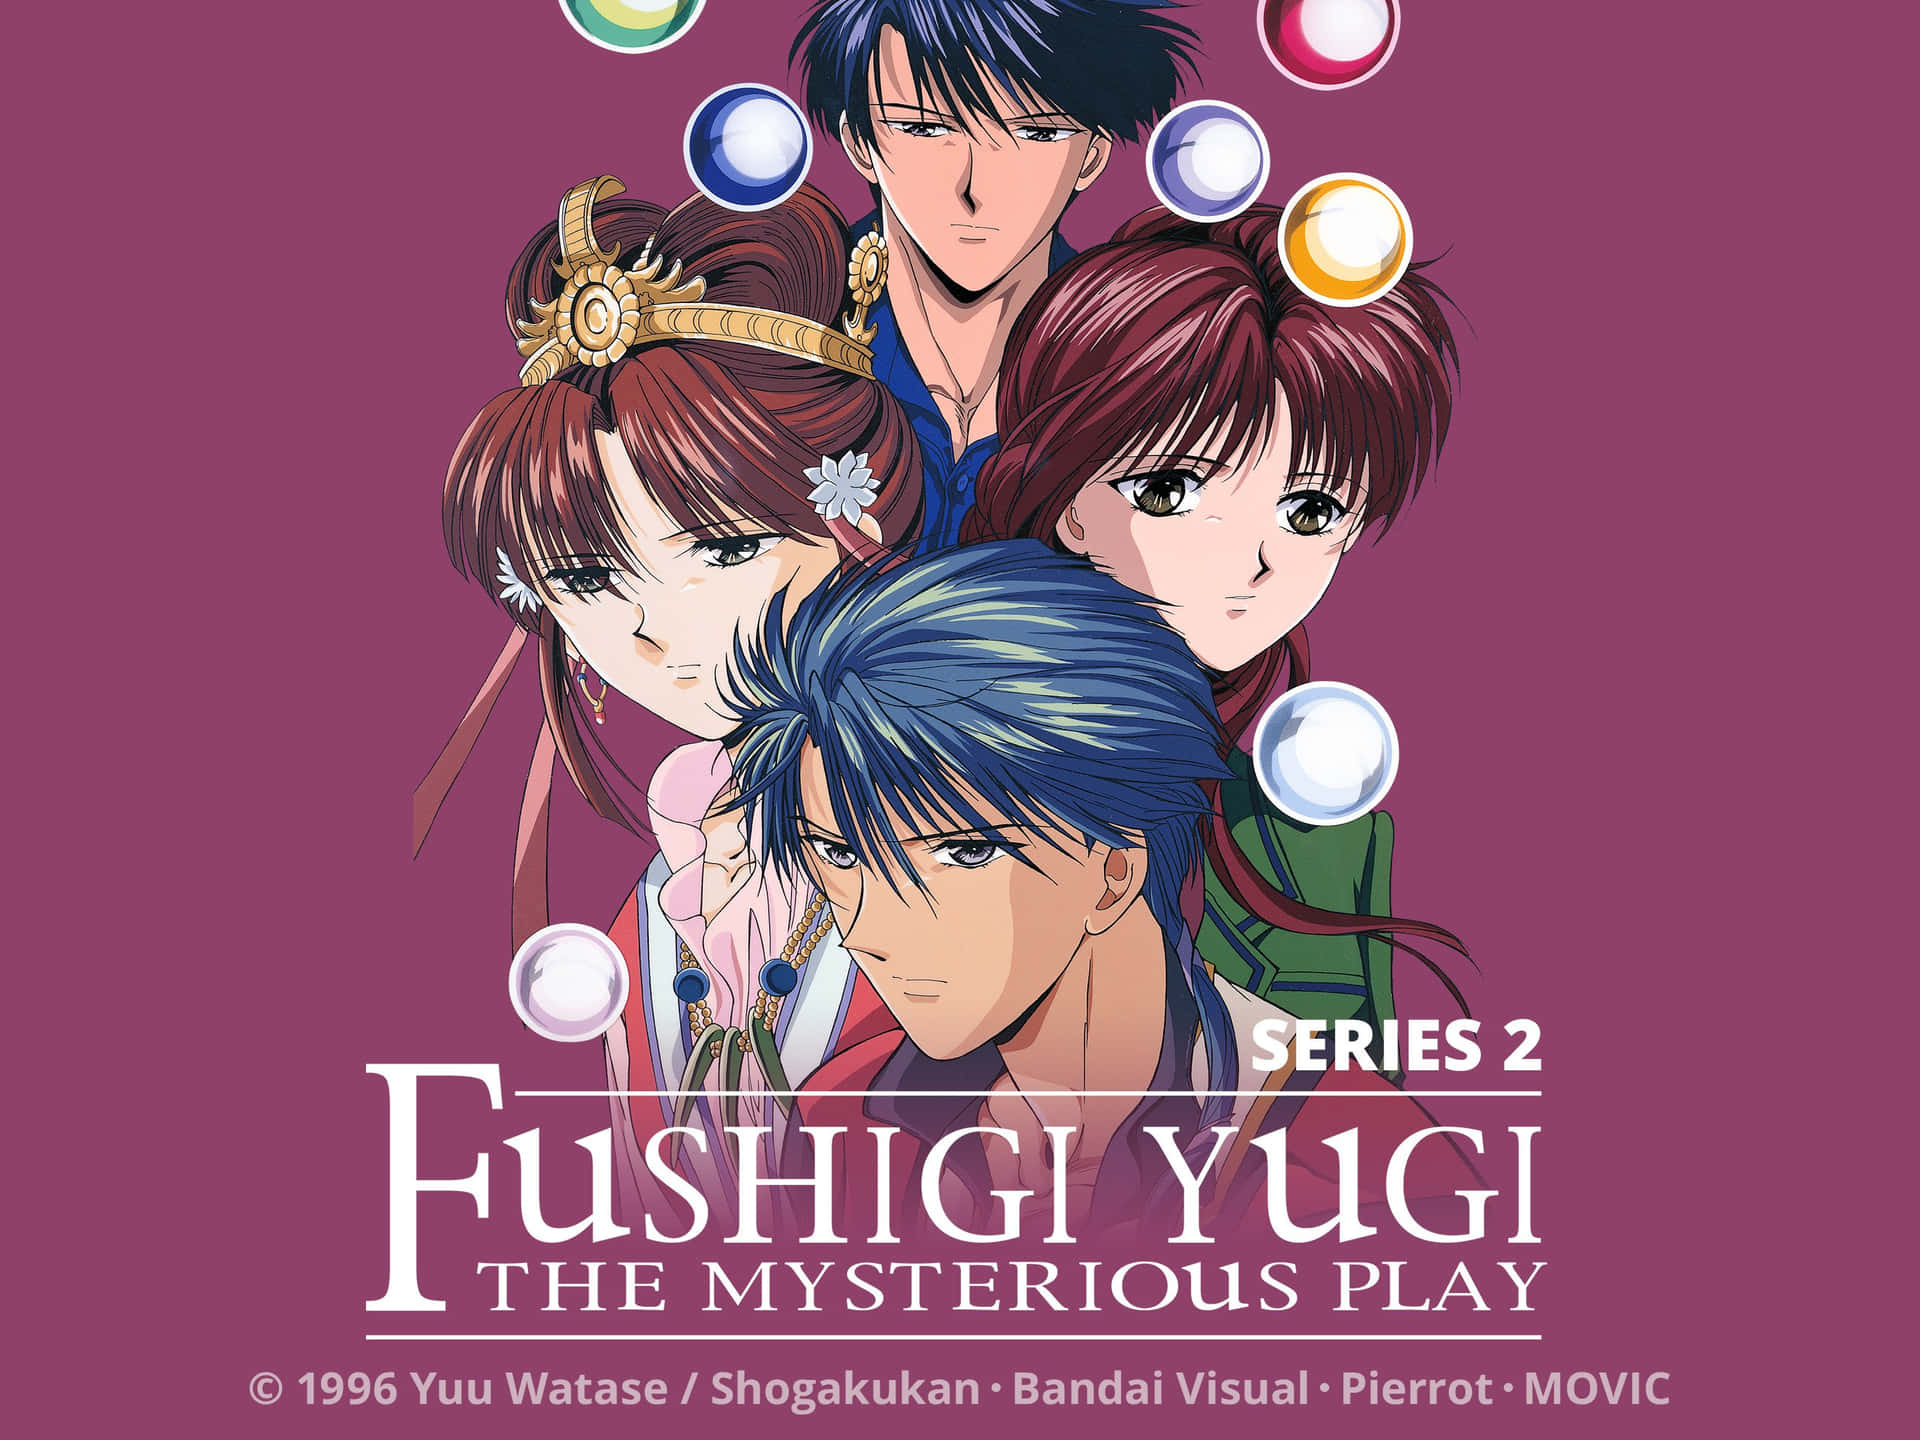 Sientela Nostalgia De Regresar A Un Mundo Mágico En Fushigi Yuugi.